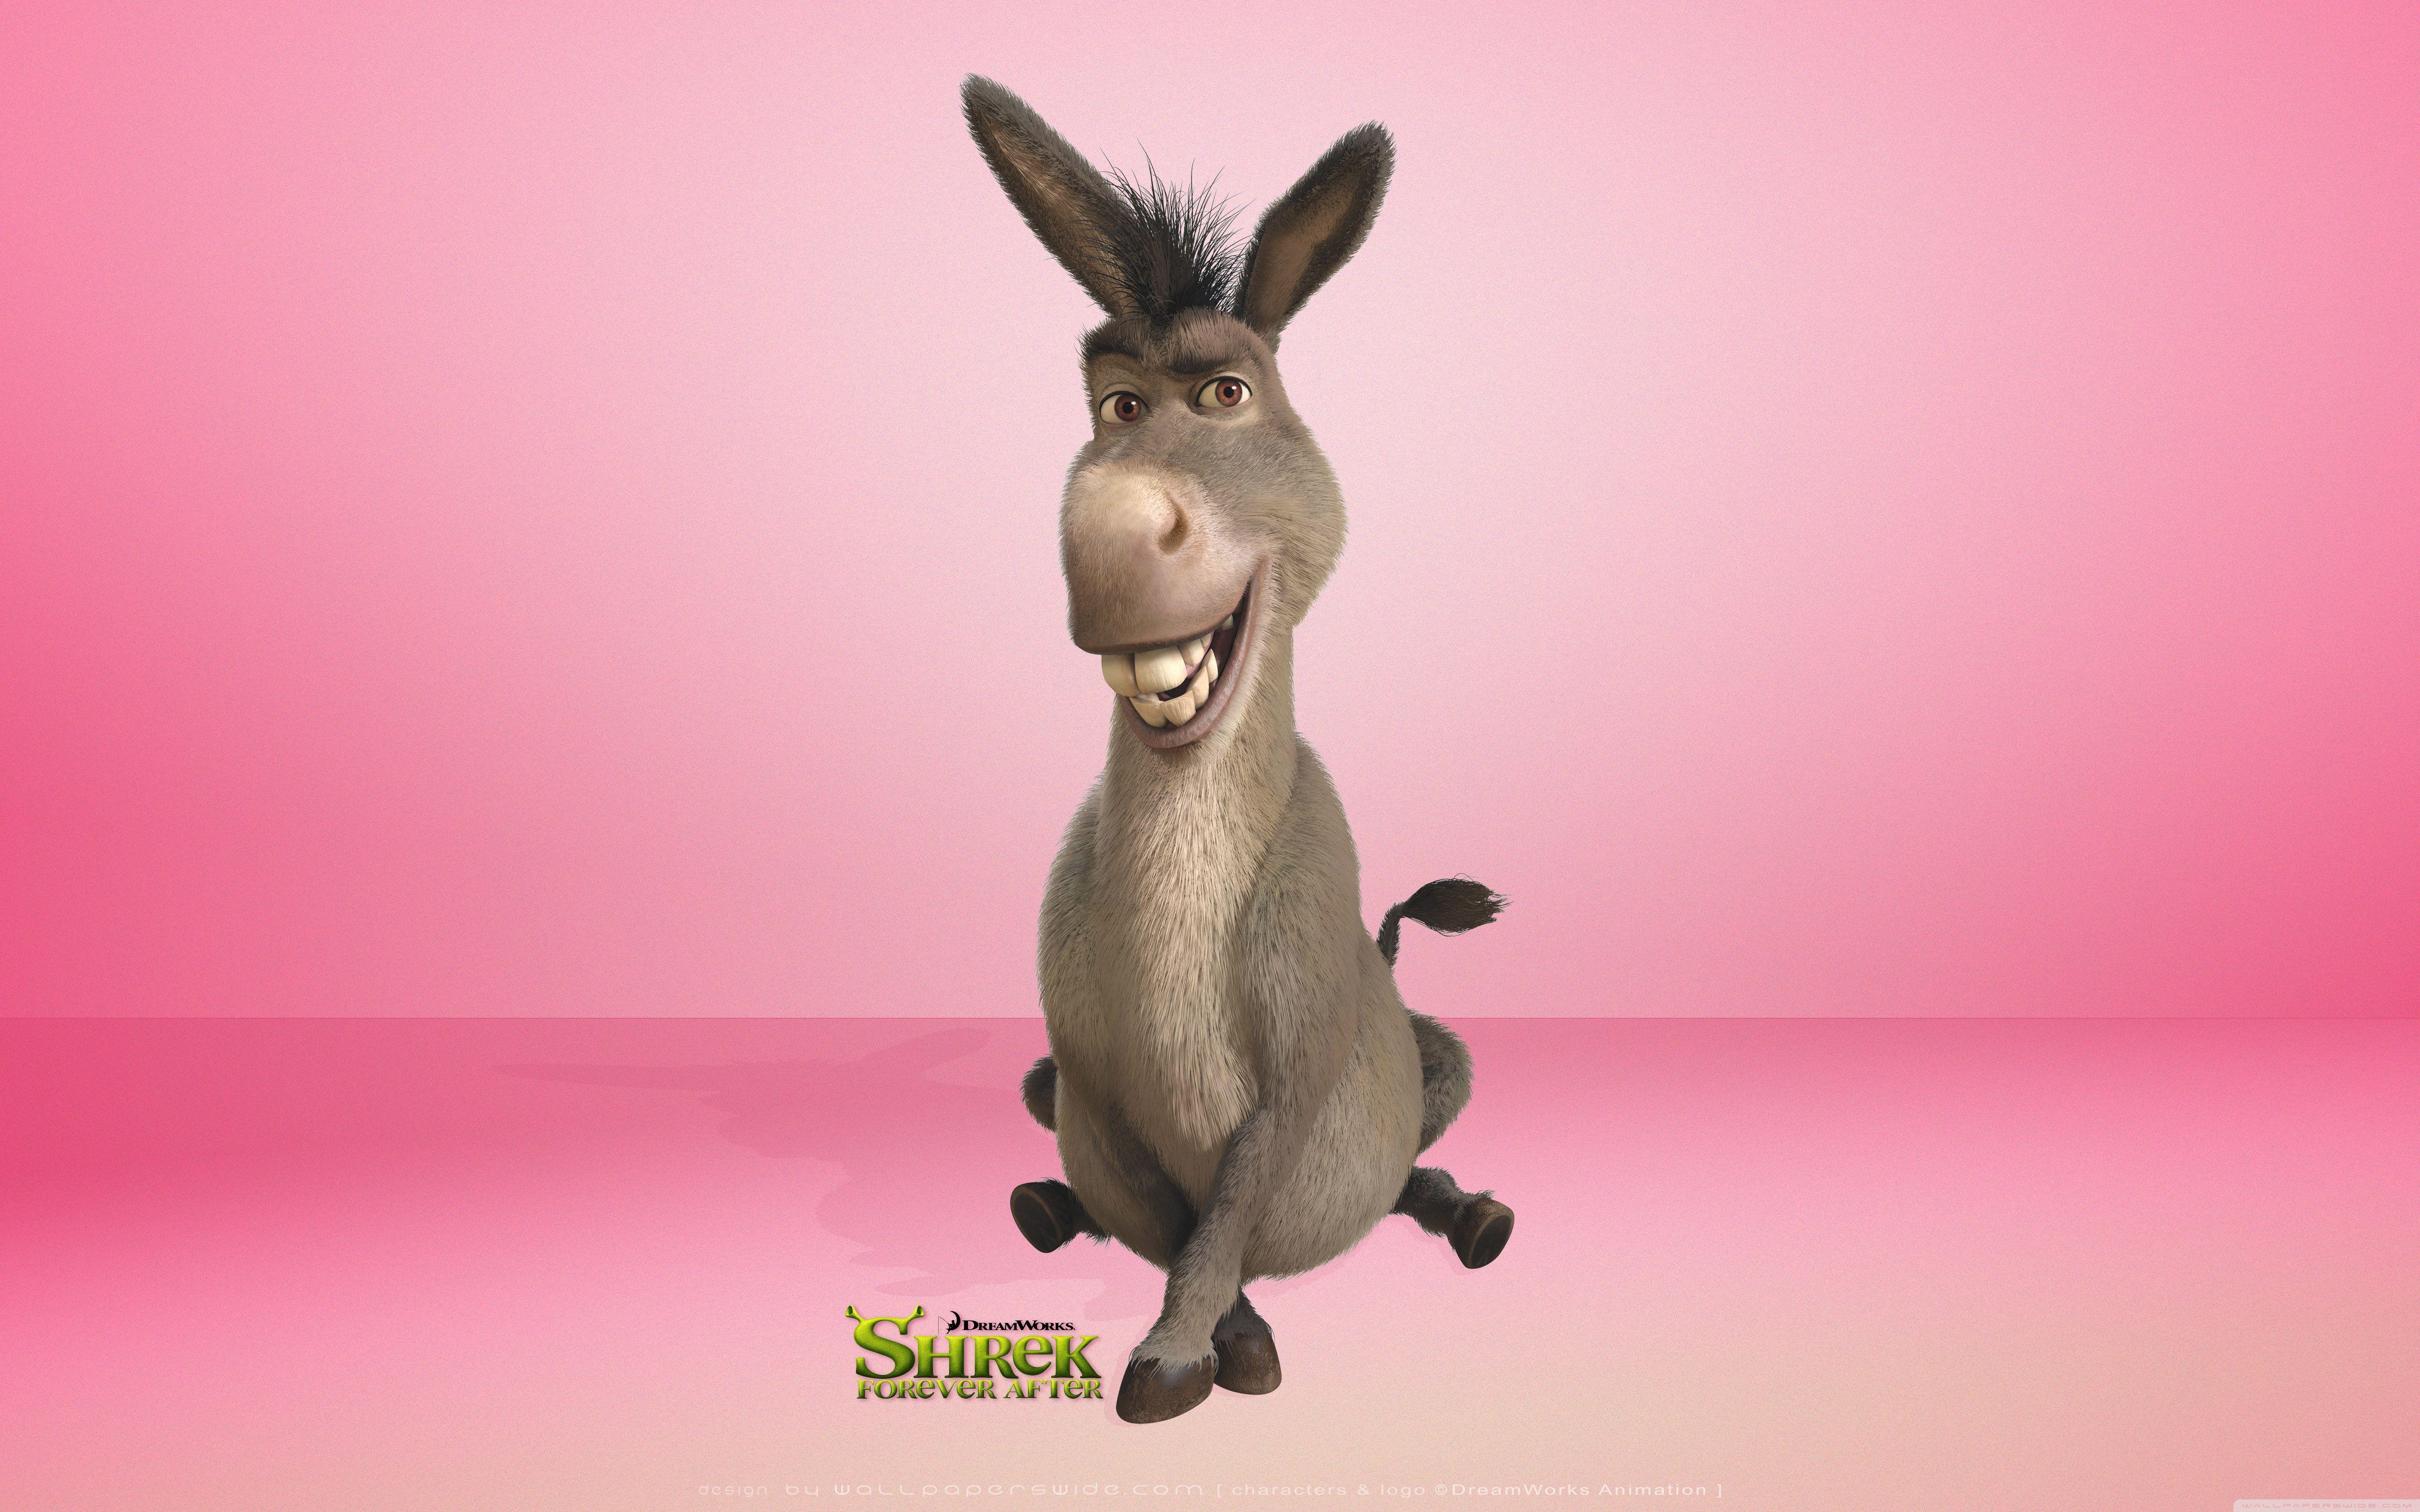 Donkey, Shrek Forever After ❤ 4K HD Desktop Wallpaper for 4K Ultra